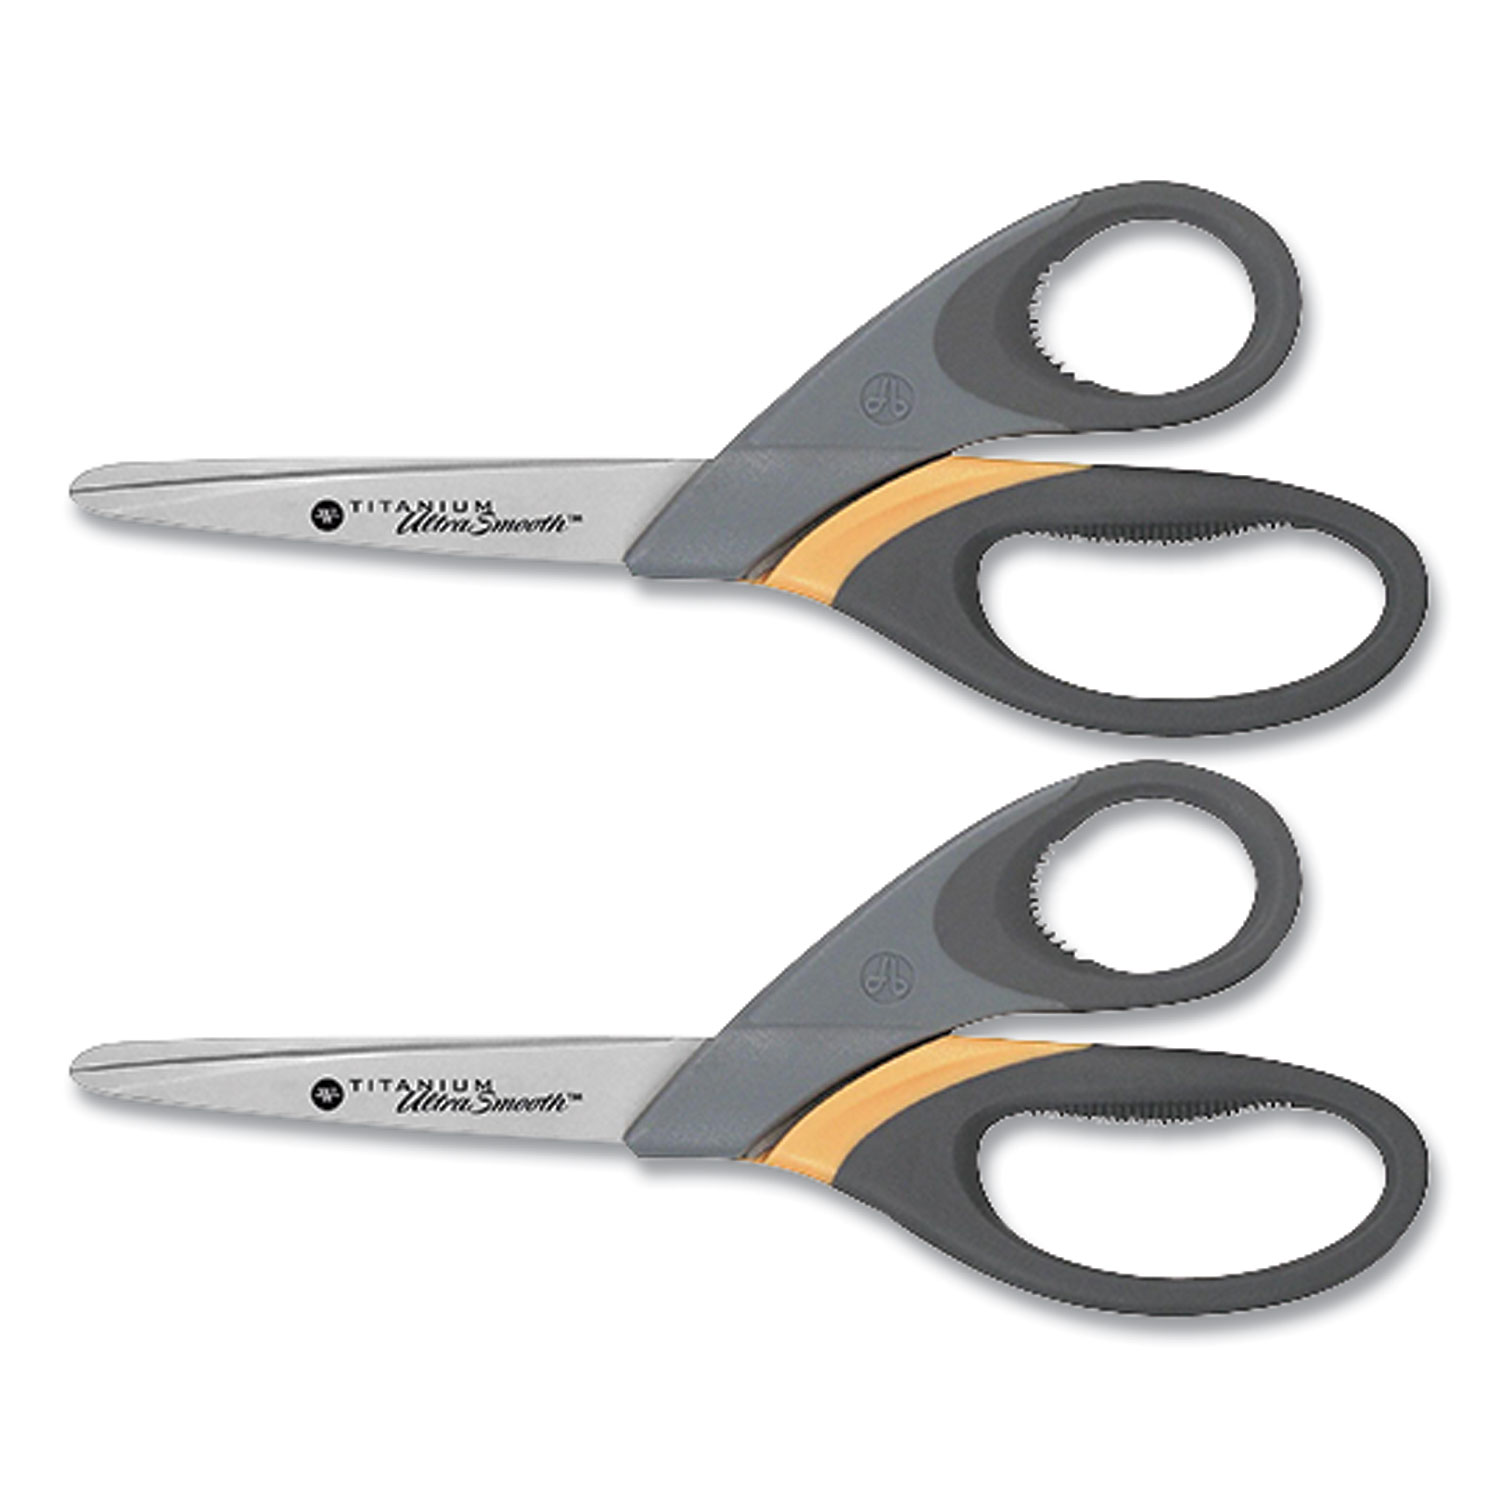  Westcott 14107 Titanium UltraSmooth Scissors, Blunt Tip, 8 Long, 3.5 Cut Length, Gray/Yellow Straight Handle, 2/Pack (WTC647672) 